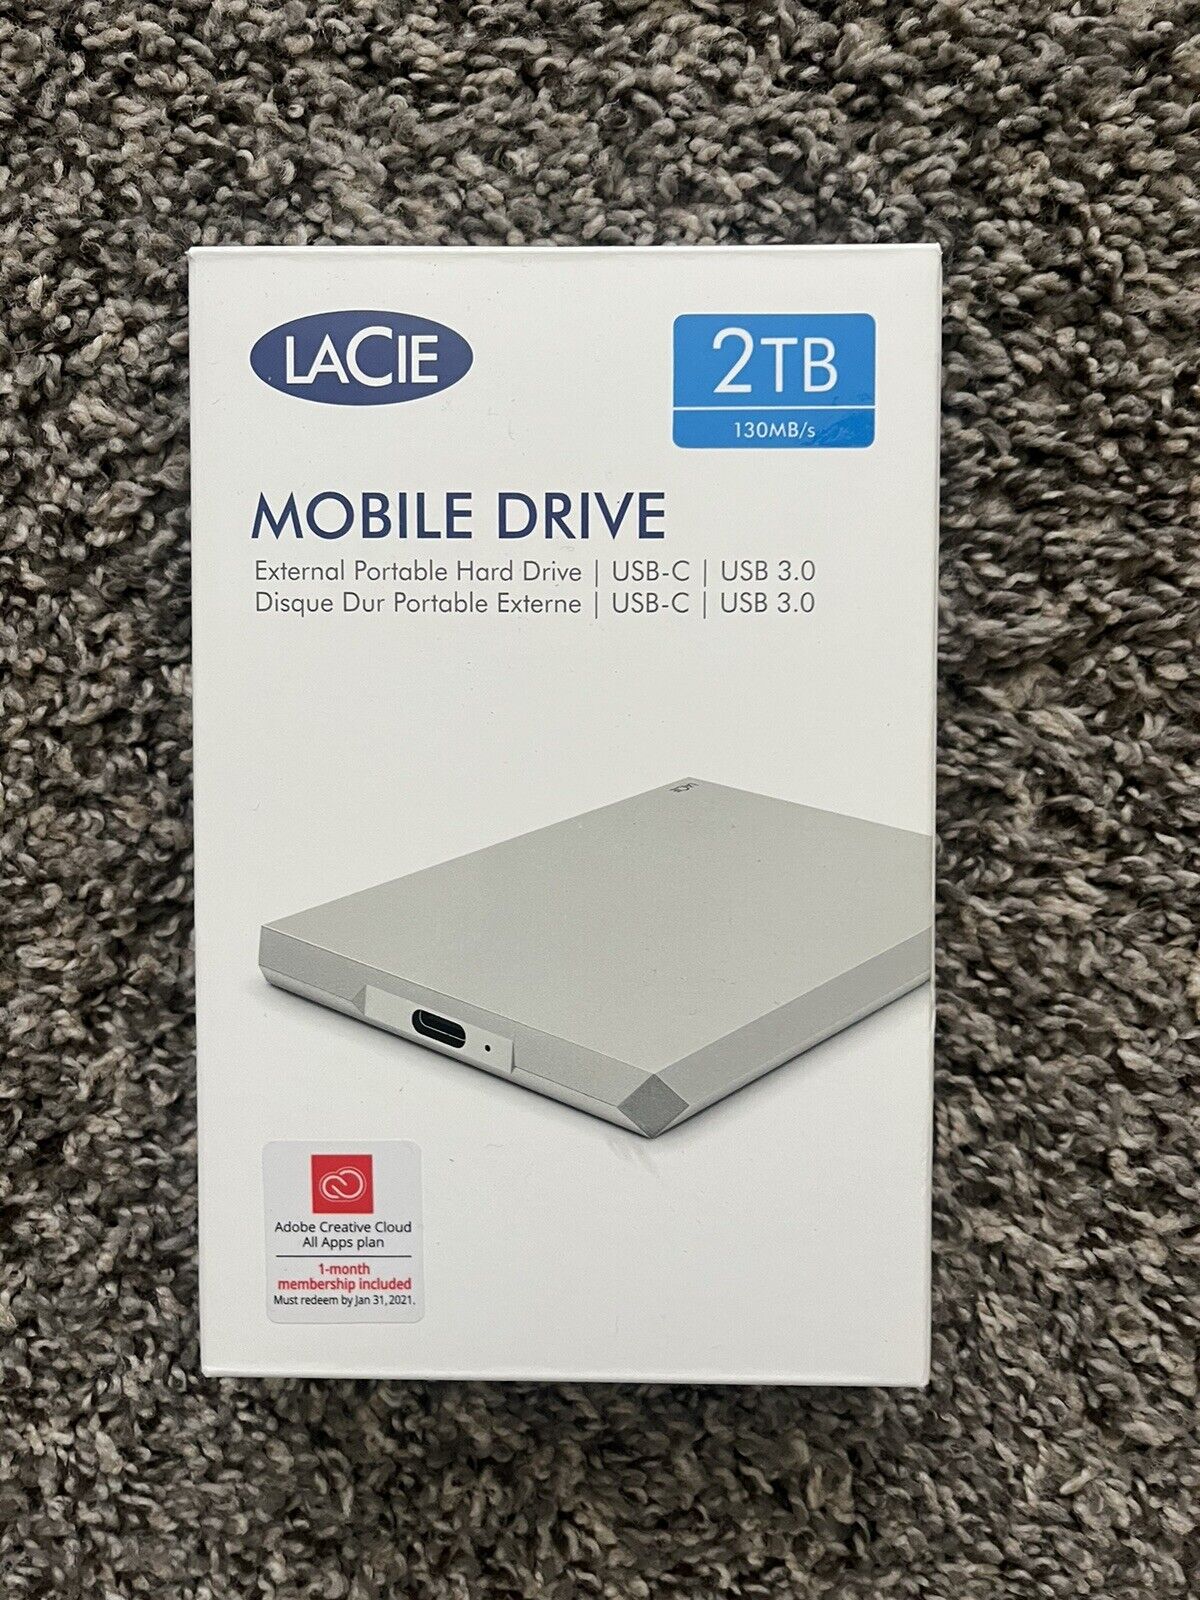 LaCie - Mobile Drive 2TB External USB Portable Hard Drive